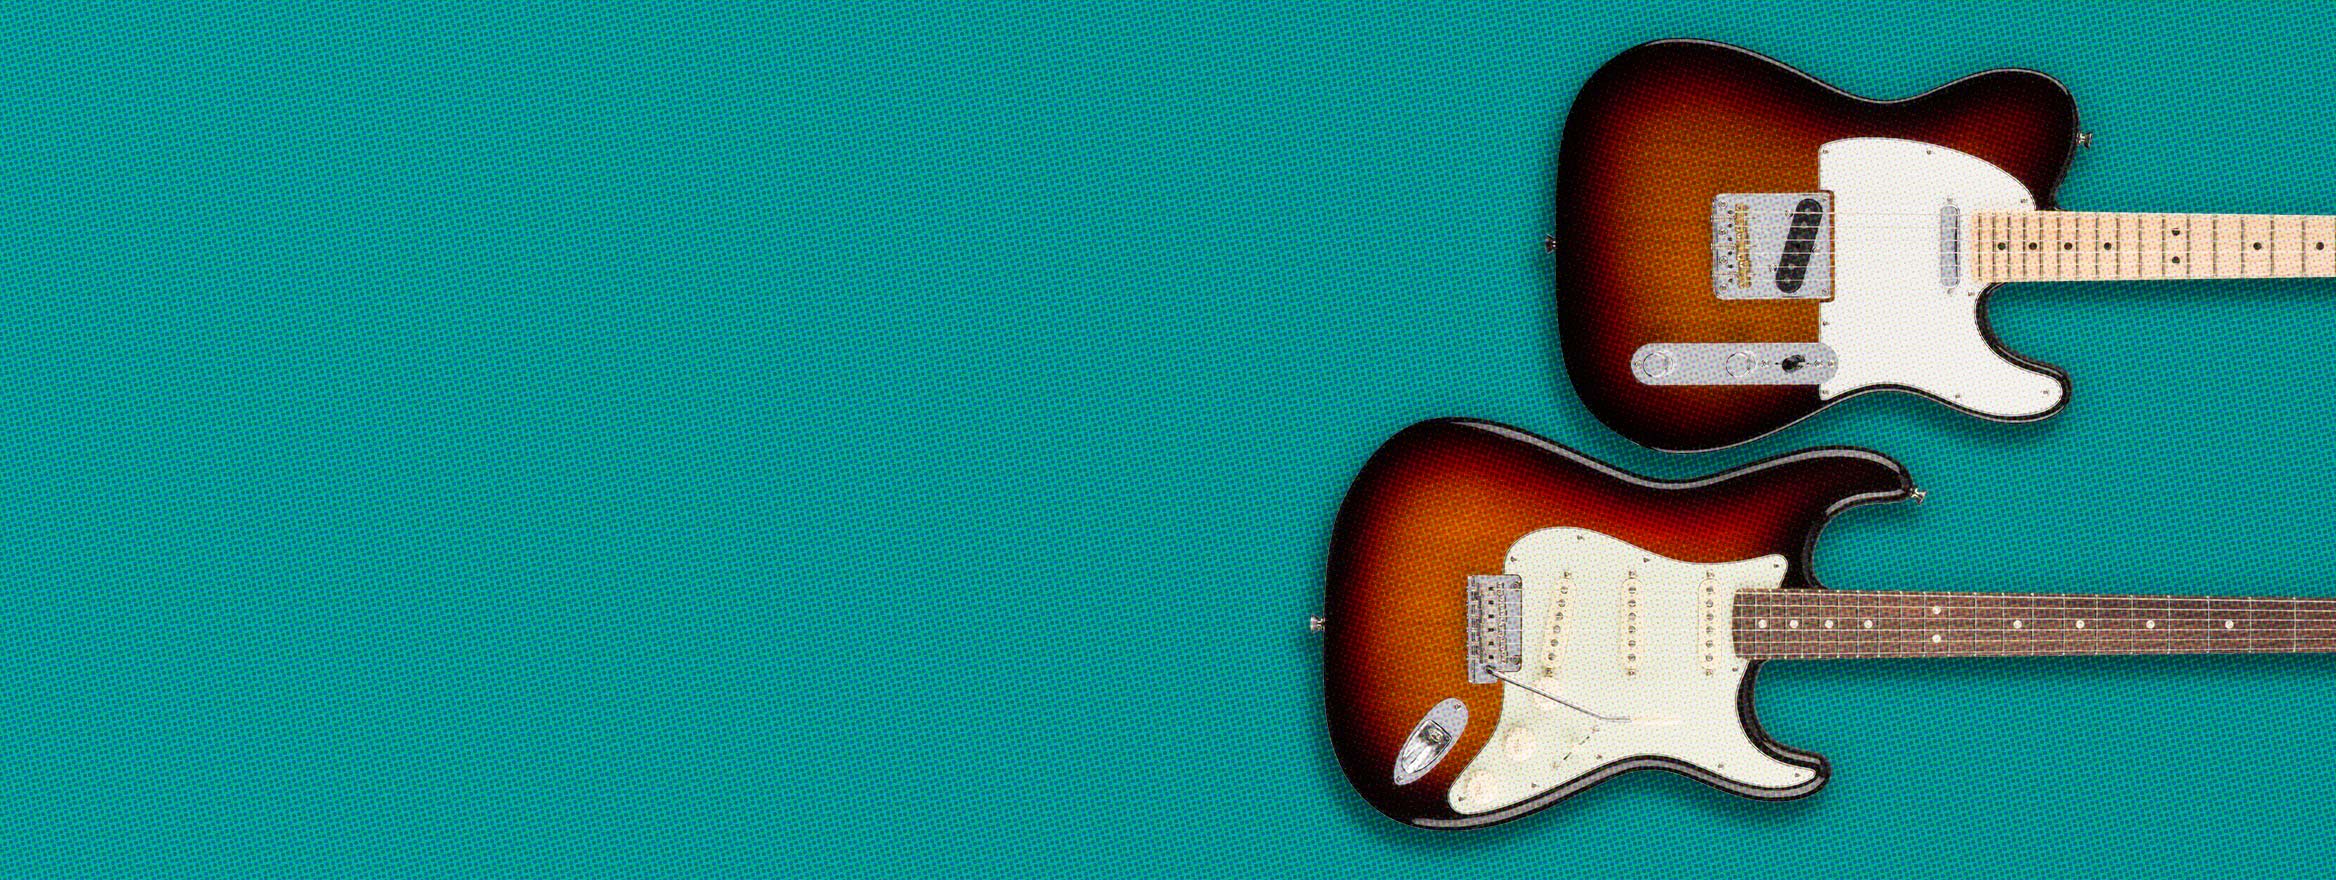 Fender Stratocaster vs Telecaster: Difference in Tone, Sound, Body 